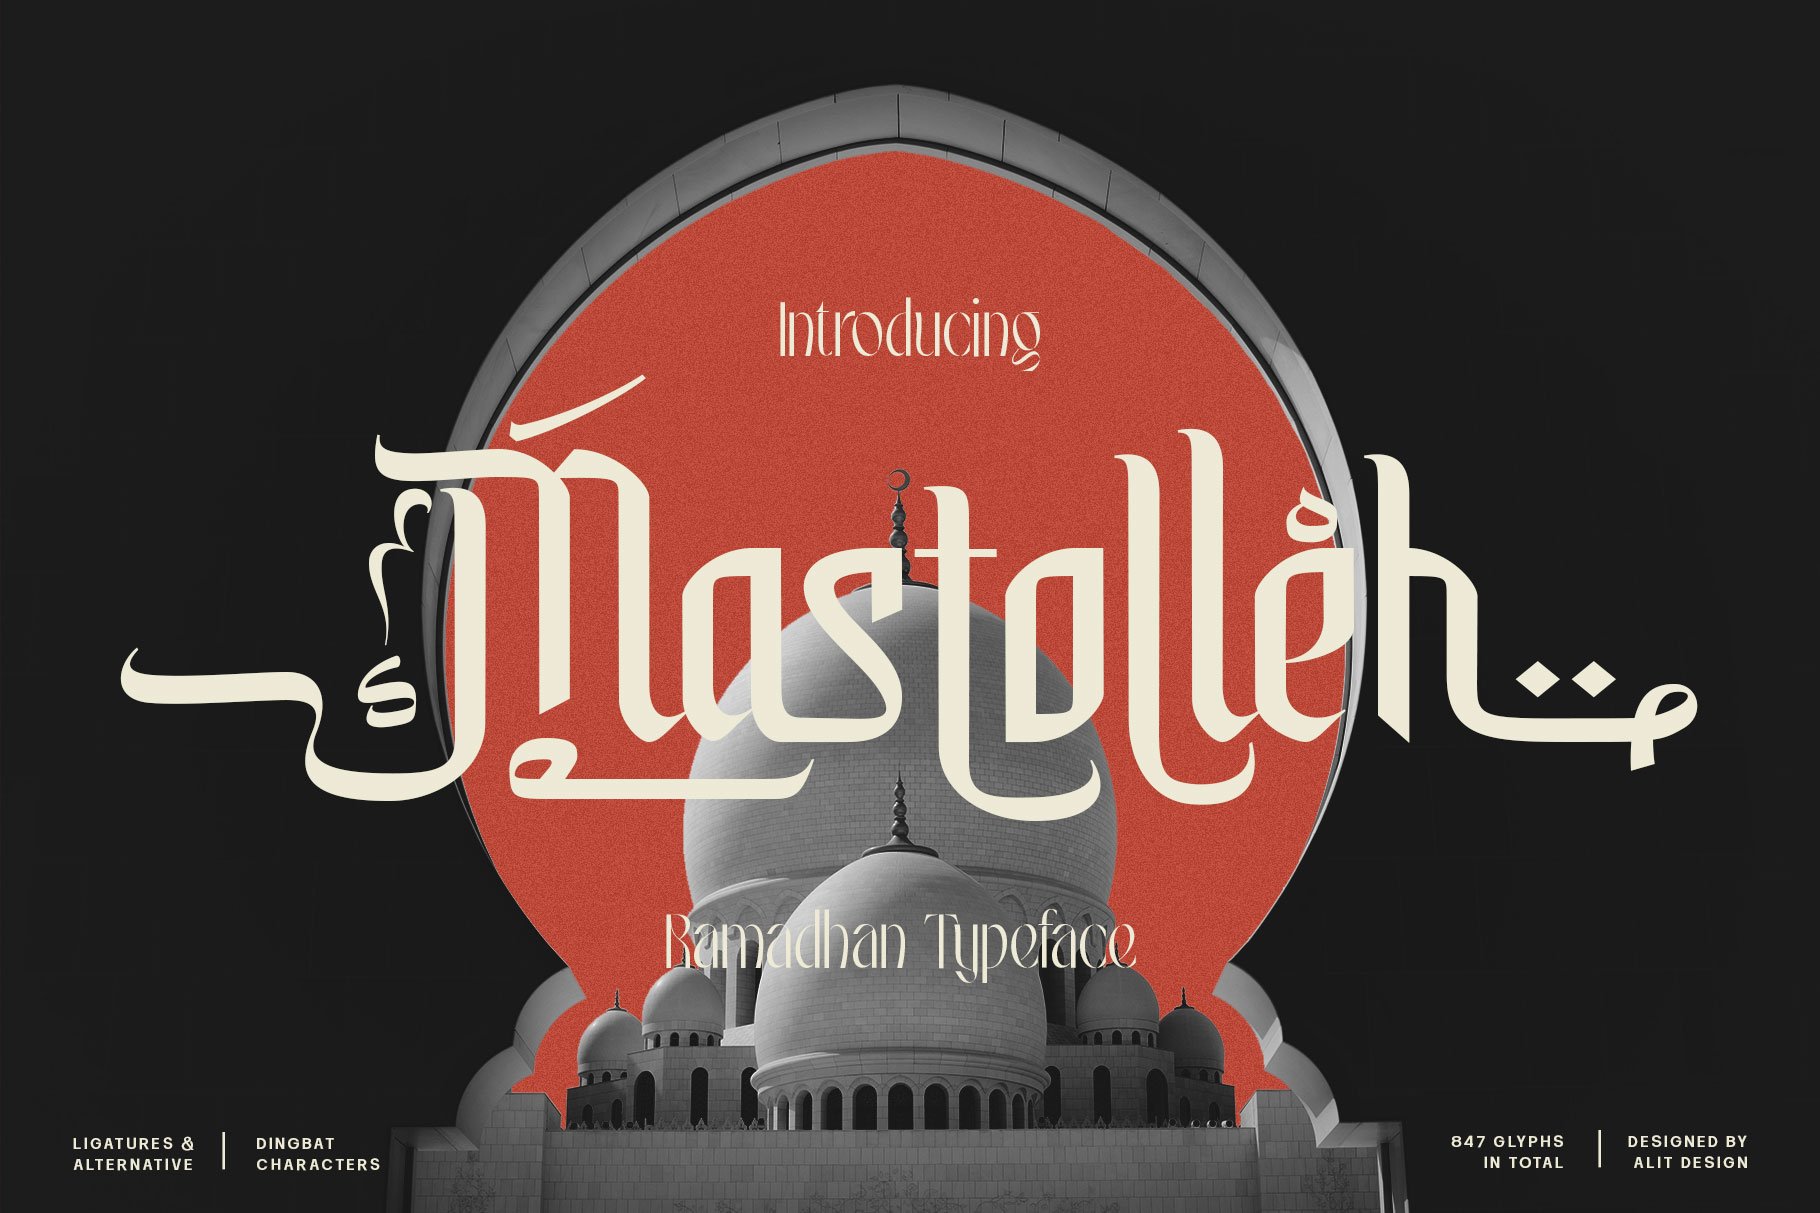 Mastolleh Ramadan Typeface cover image.